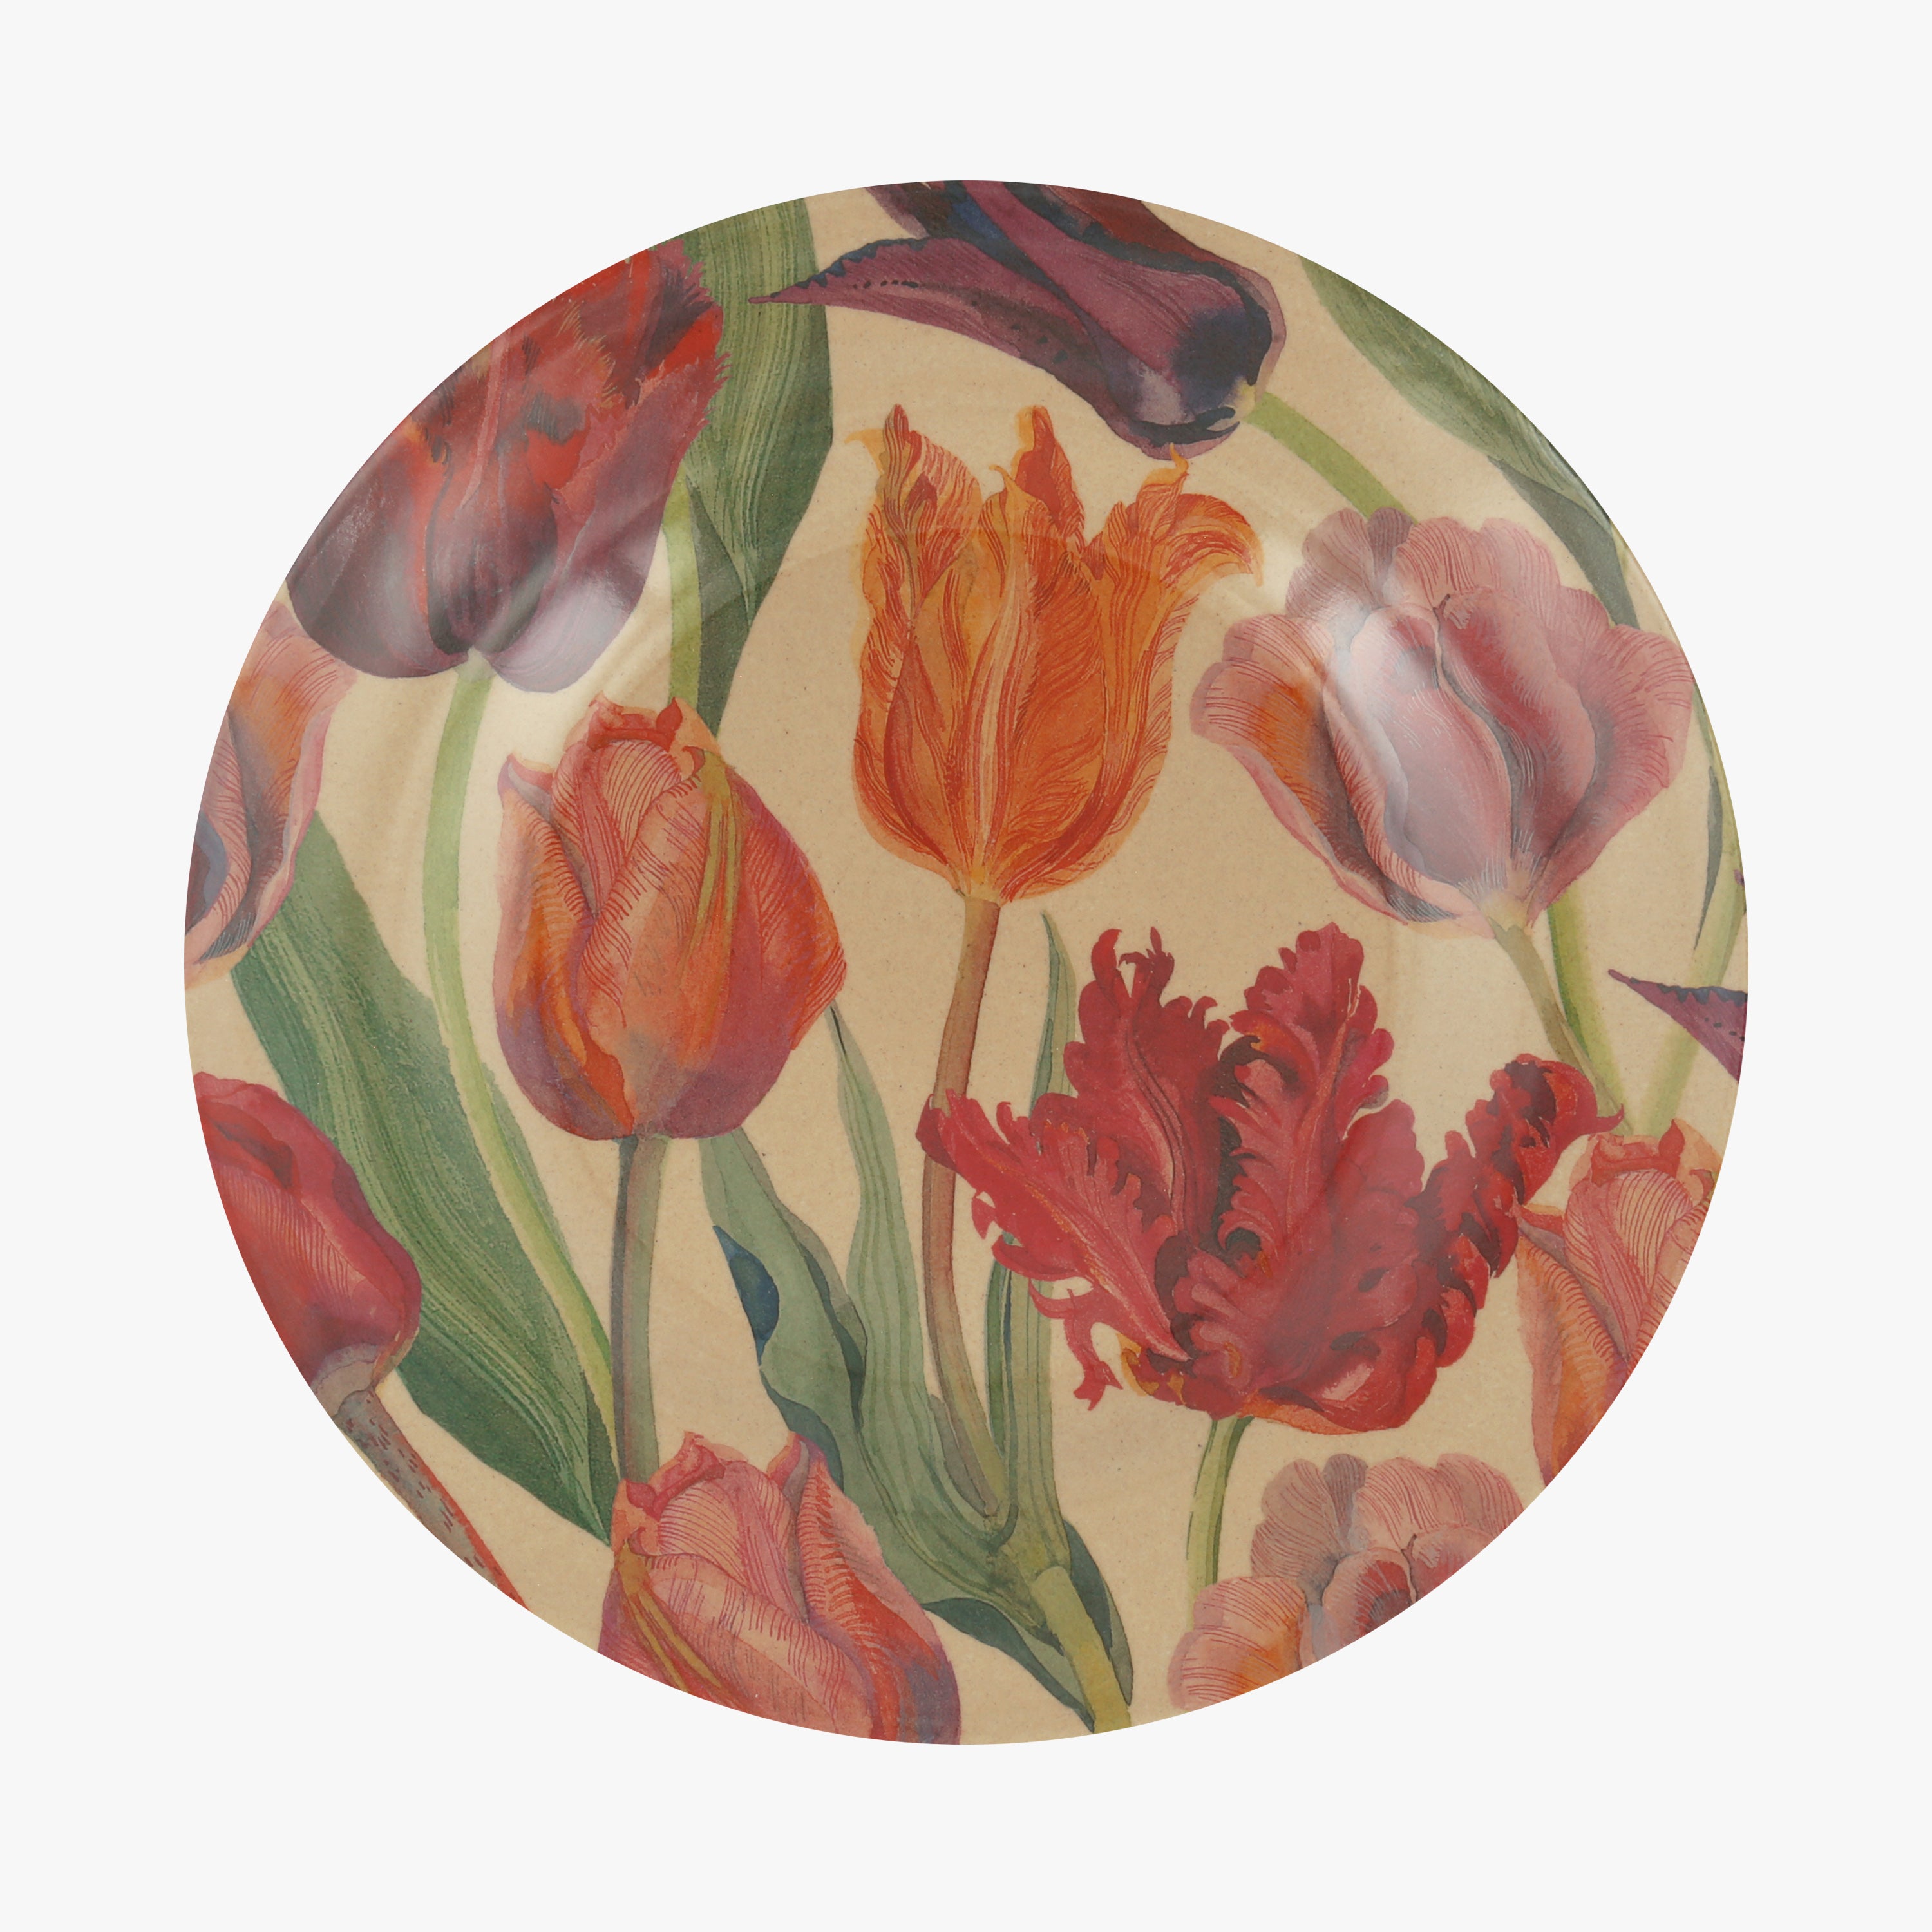 Tulips Rice Husk Plate - Unique Handmade & Handpainted English Earthenware British-Made Pottery Plat